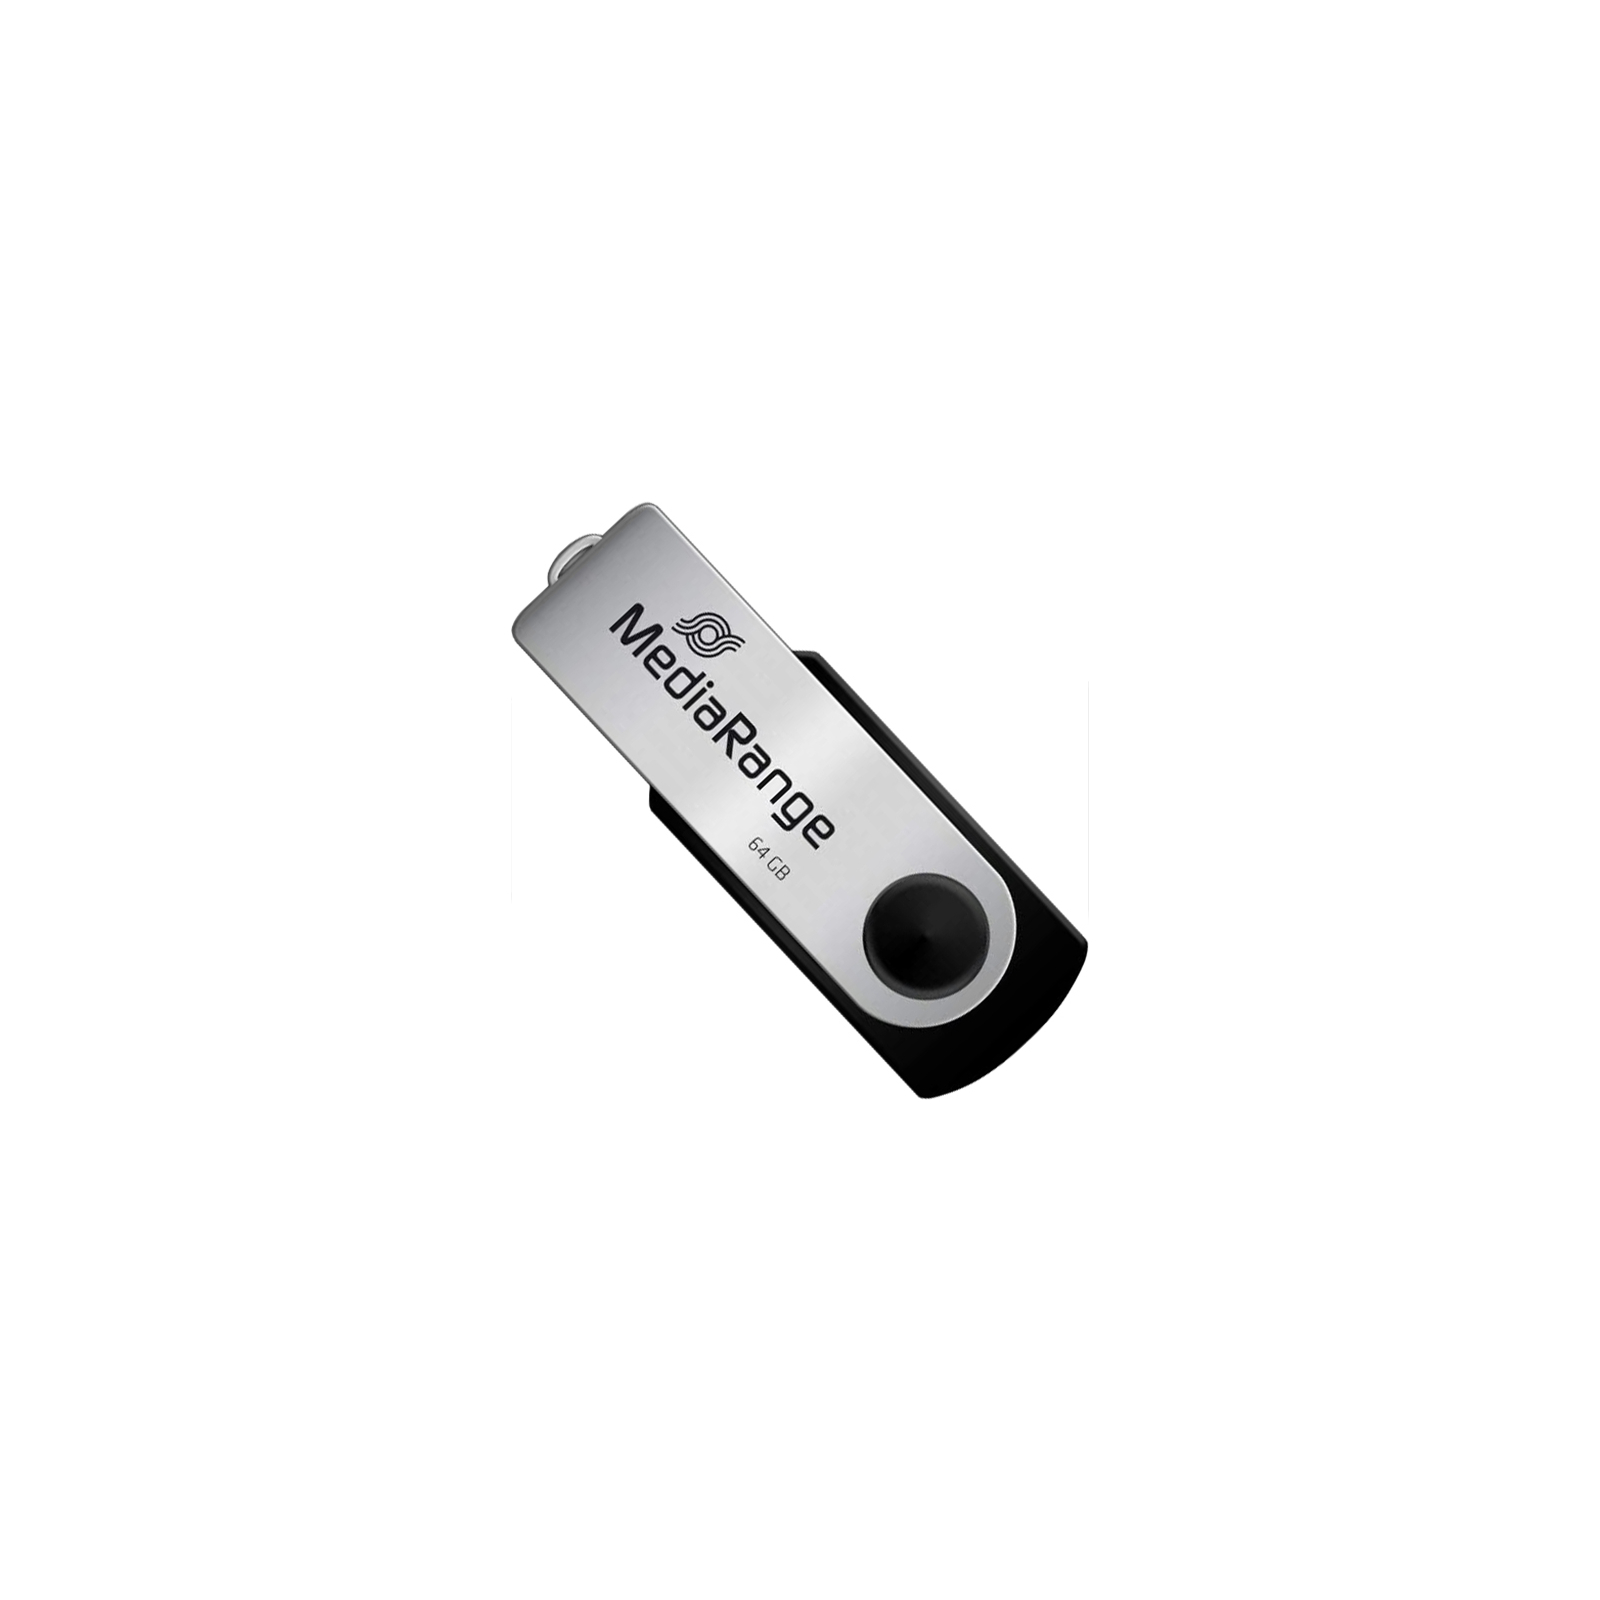 USB флеш накопитель Mediarange 64GB Black/Silver USB 2.0 (MR912)